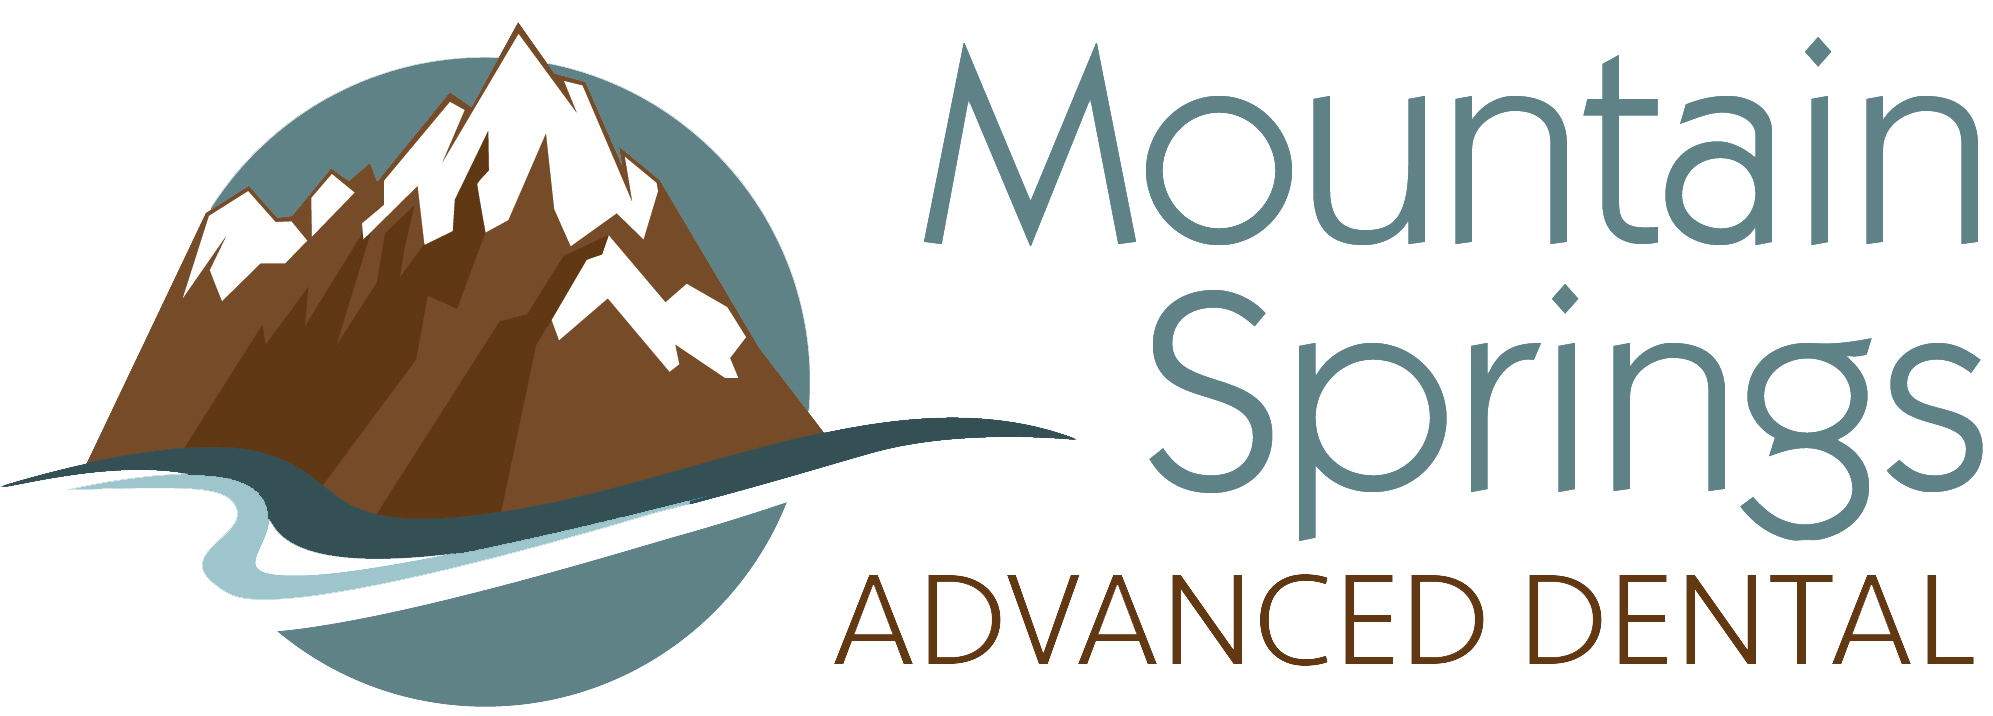 Company logo of Mountain Springs Advanced Dental